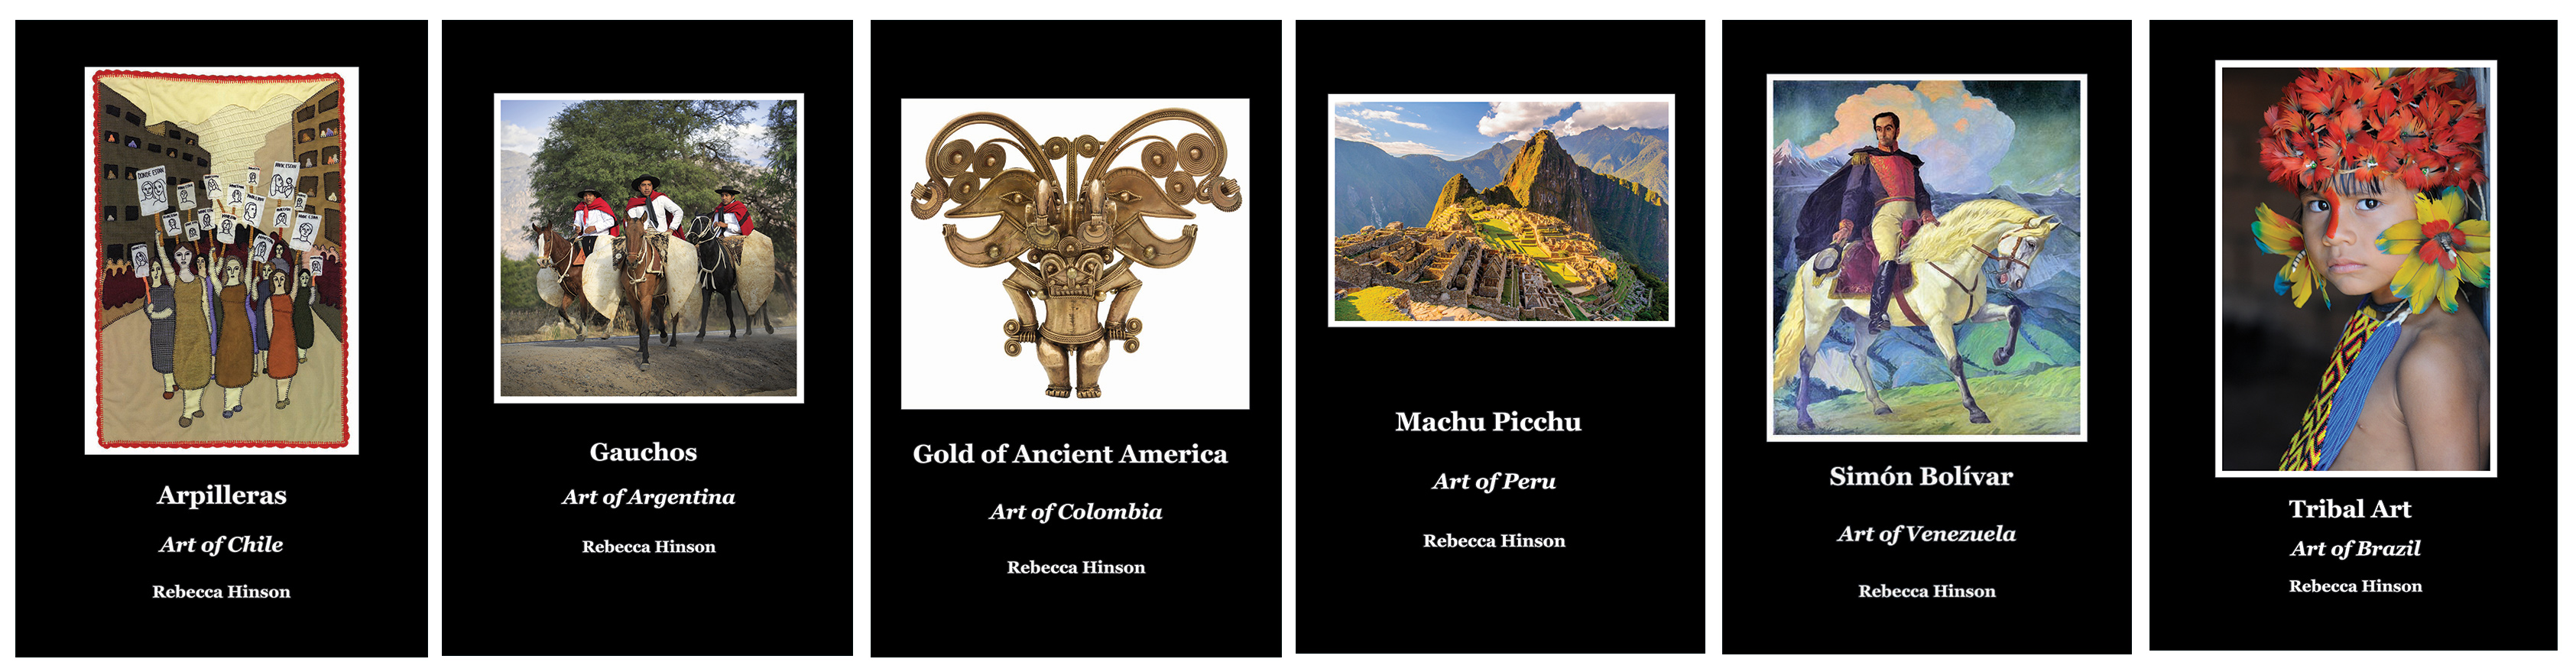 Art of the Americas Presented at Florida International University